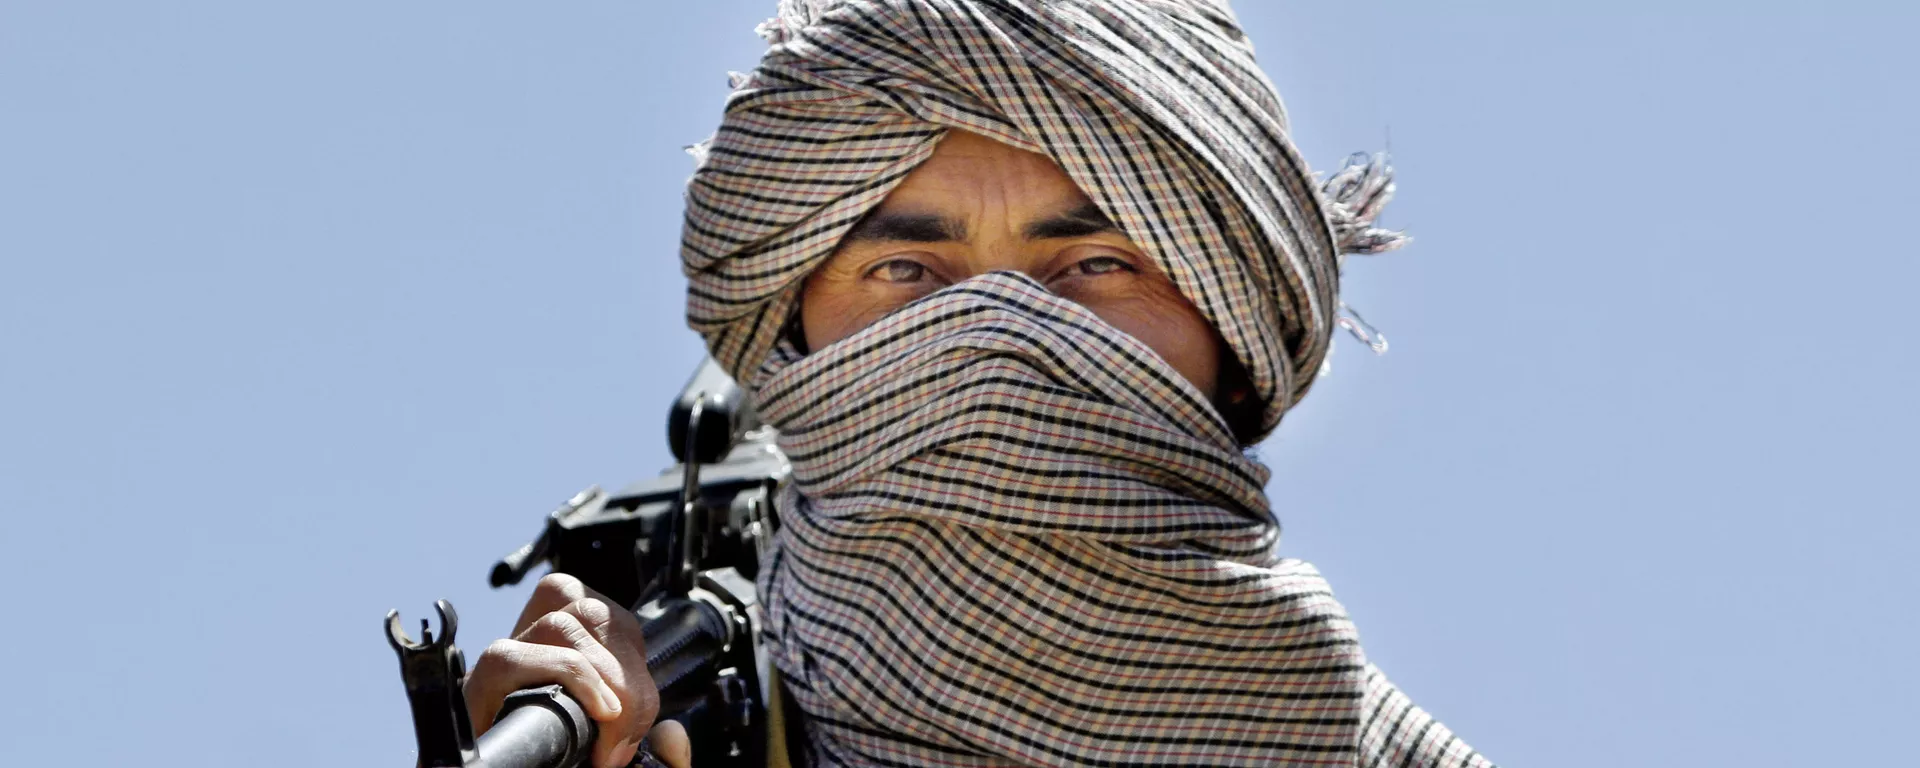 Член террористической организации Талибан в Афганистане - Sputnik Таджикистан, 1920, 23.06.2021